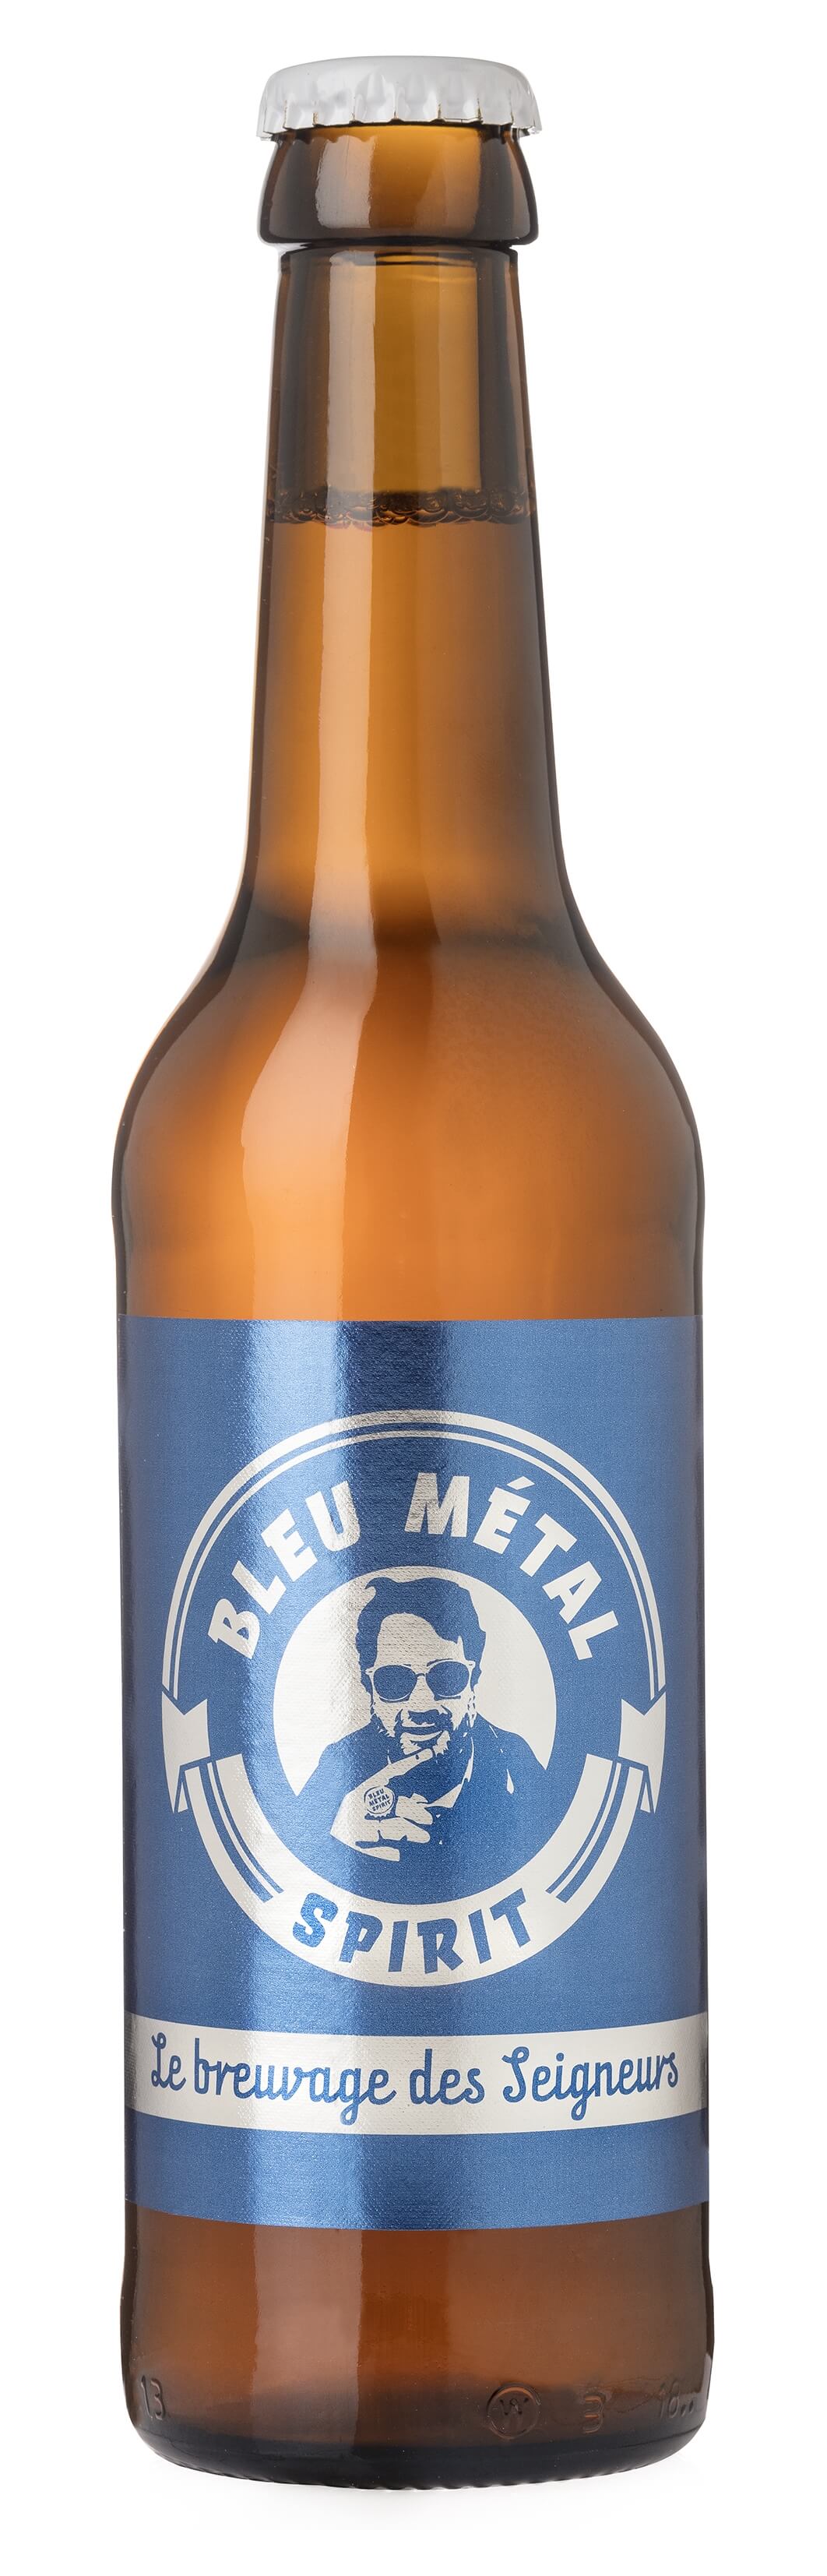 La-Rouget-Bleu-Metal_Beer_23604_0.jpeg